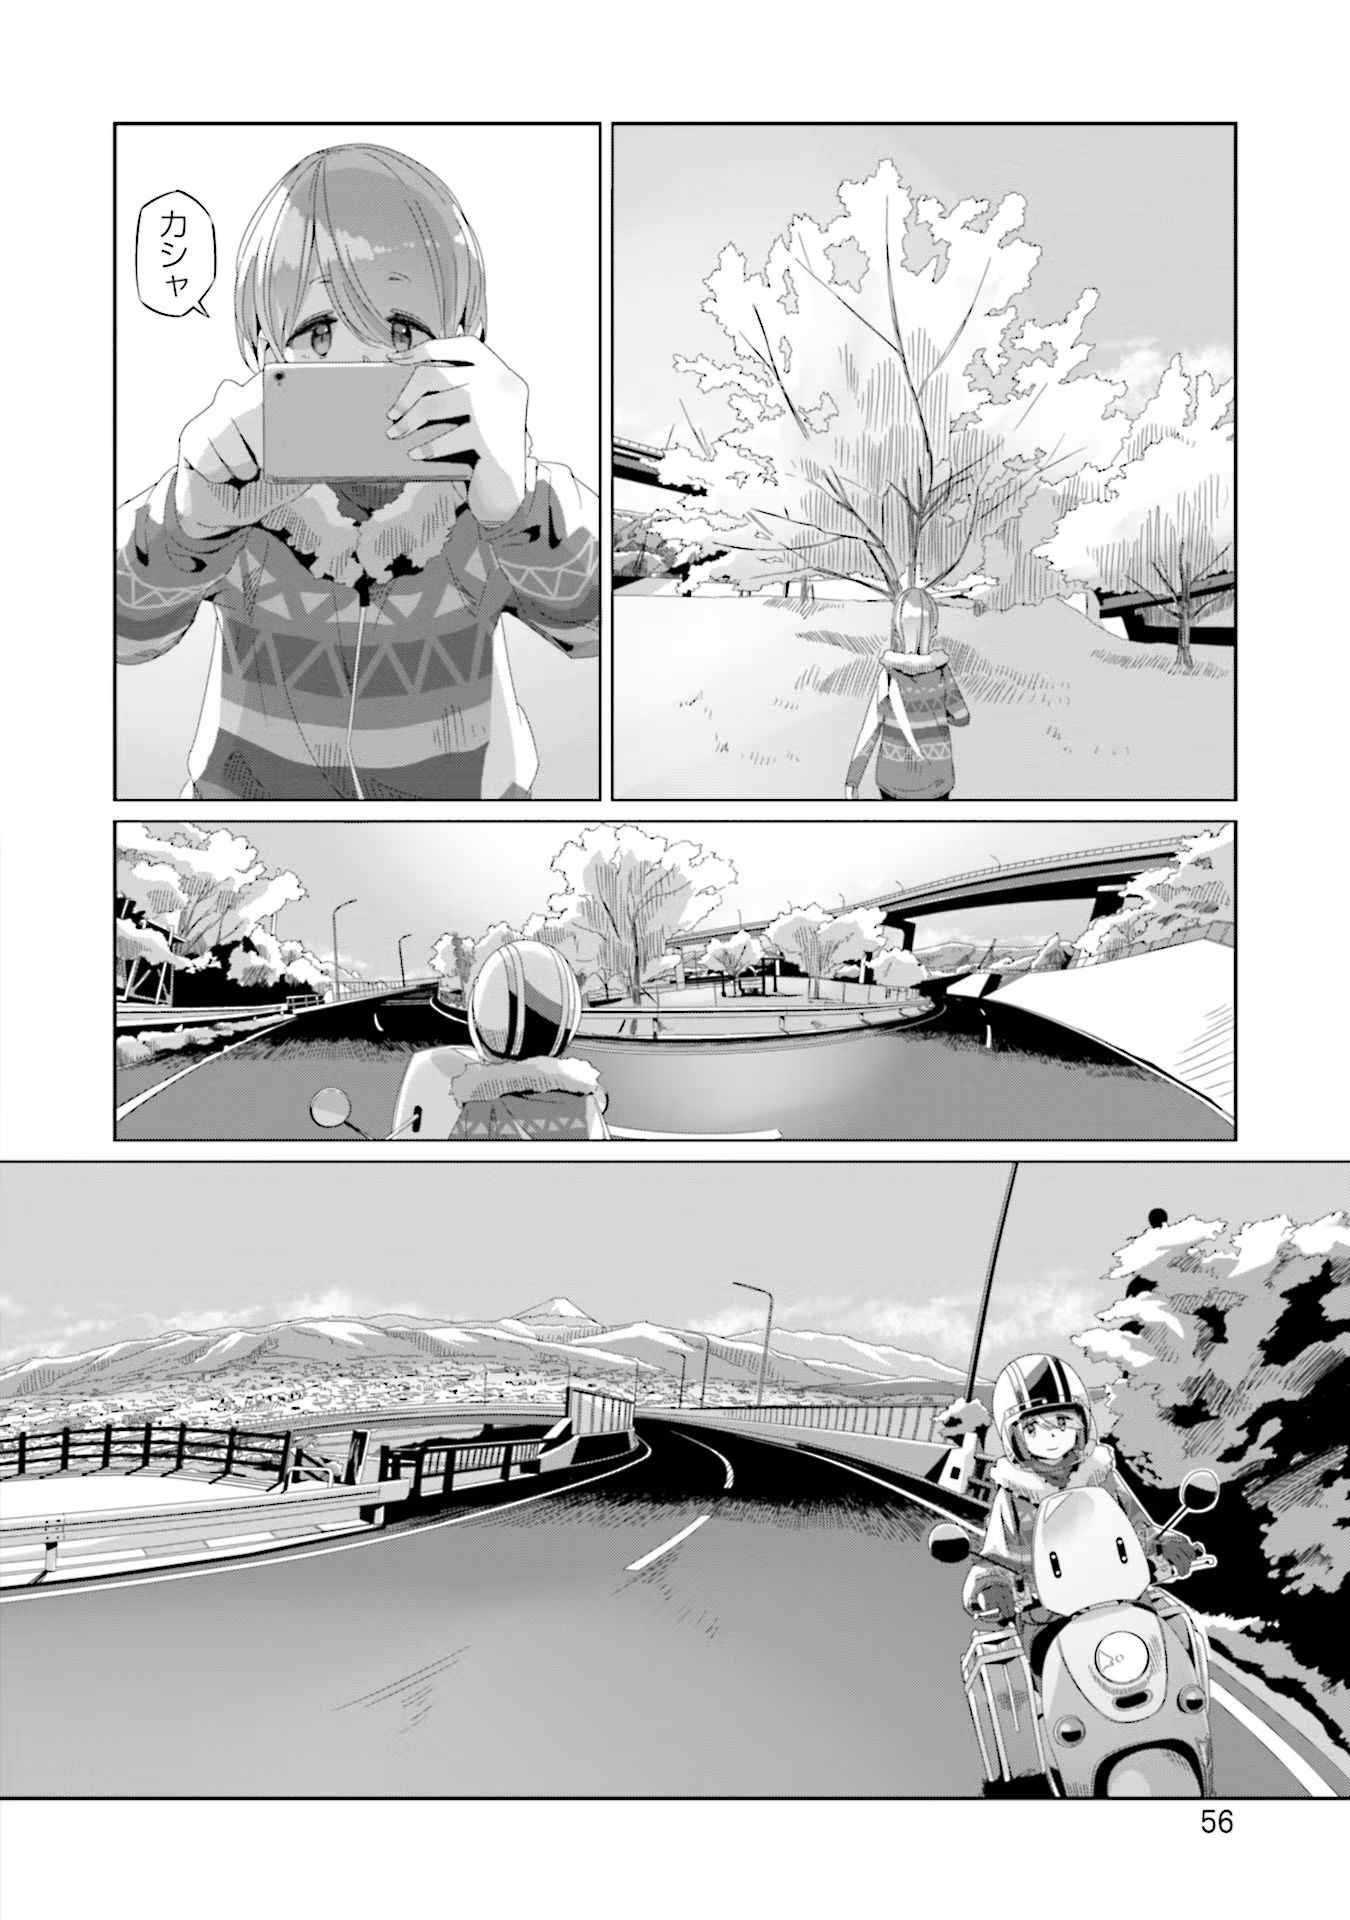 Yuru Camp - Chapter 72 - Page 2